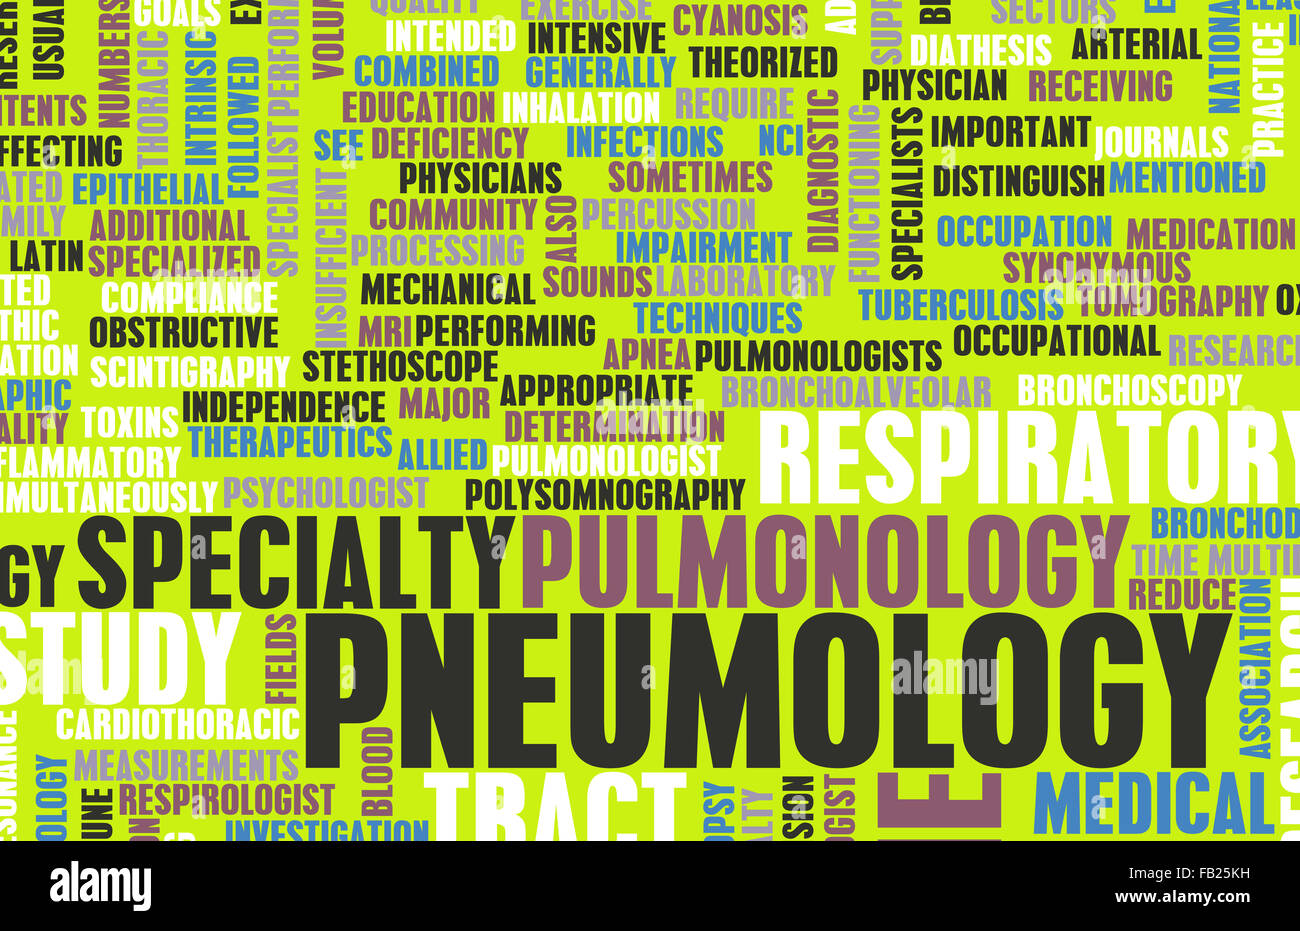 Pneumology or Pneumologist Medical Field Specialty As Art Stock Photo